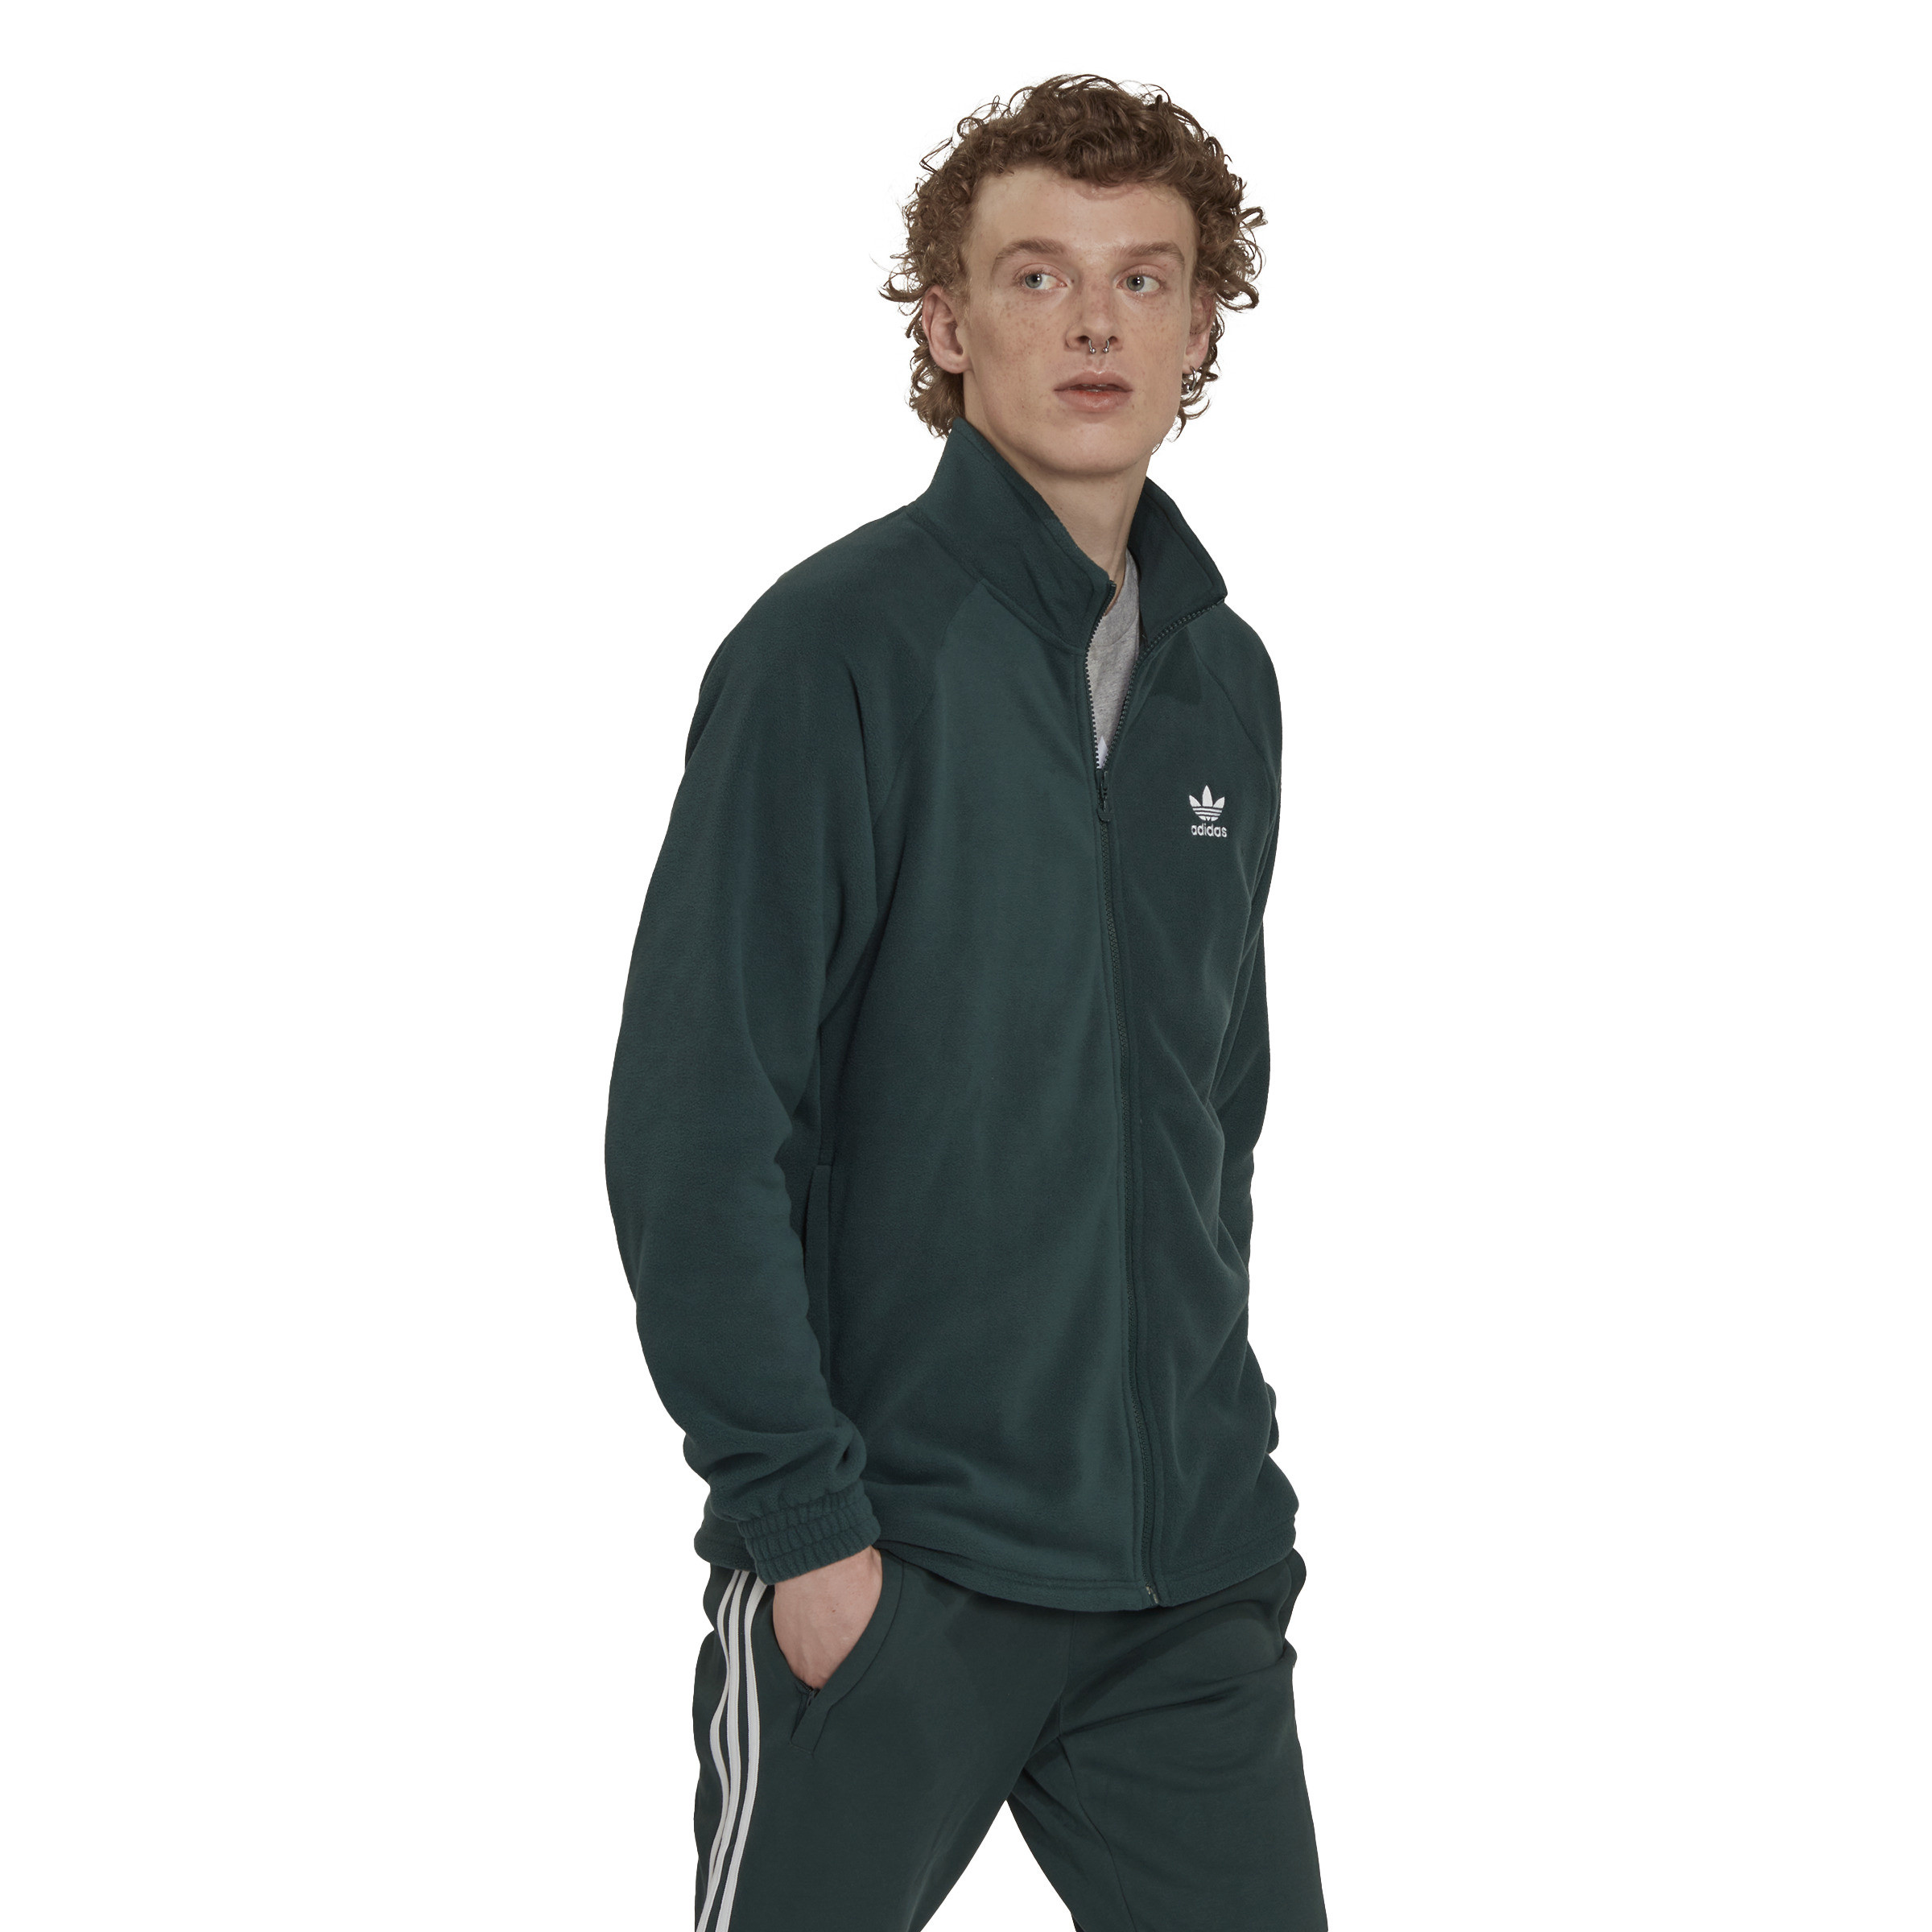 Adidas - Adicolor Classics Trefoil Fleece Jacket, Dark Green, large image number 2